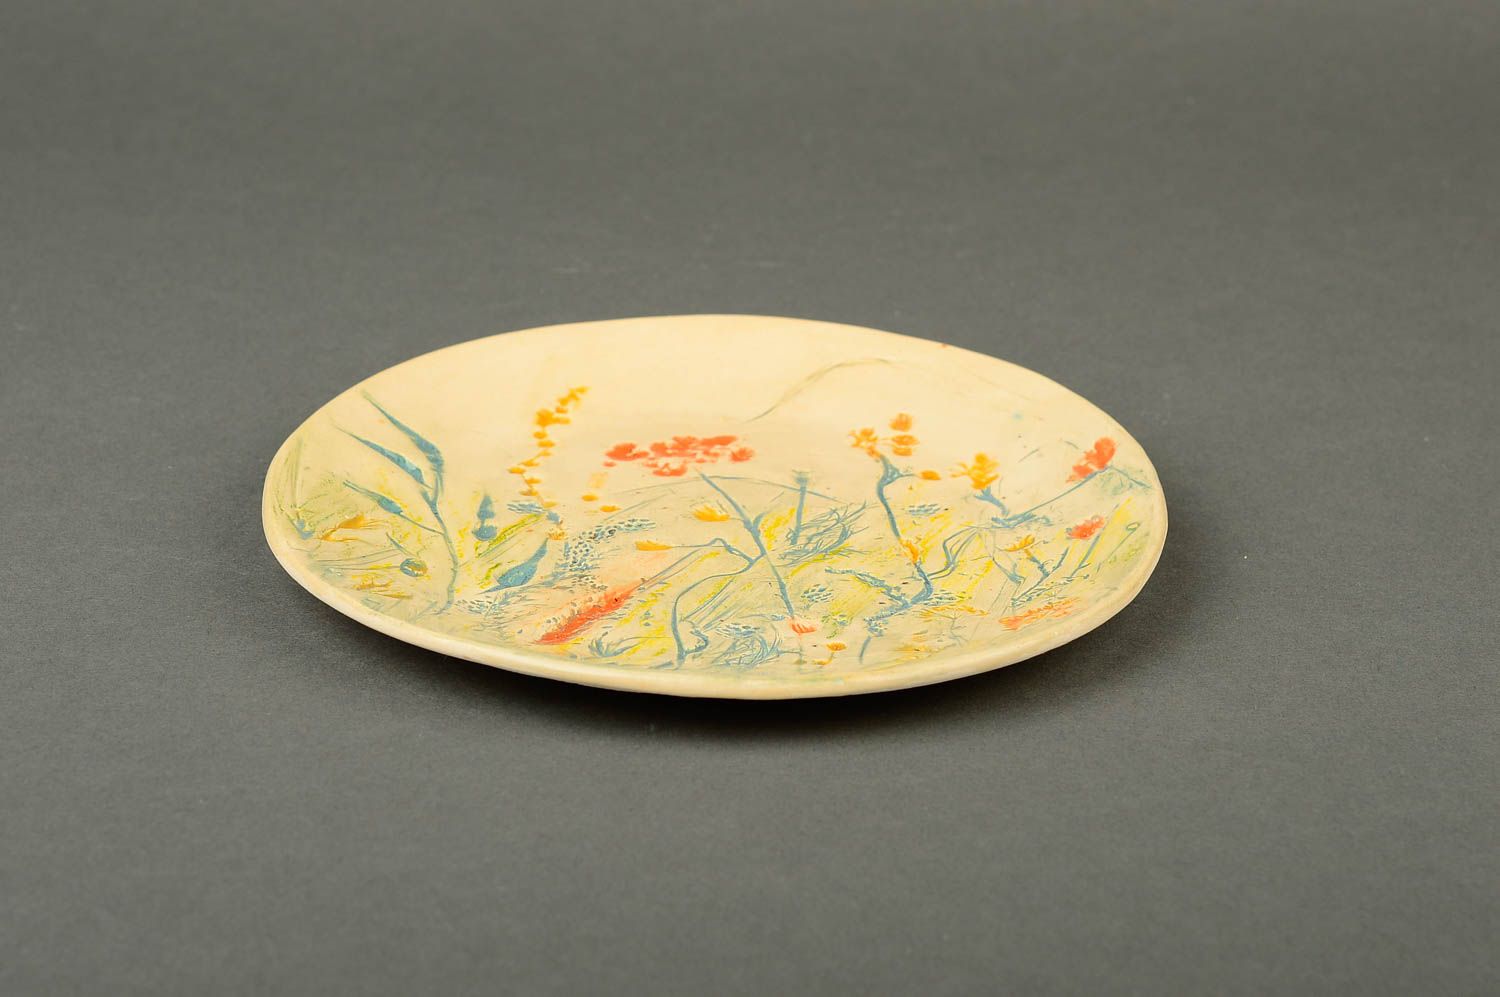 Beautiful handmade ceramic plate dishware ideas unusual kitchen supplies photo 3